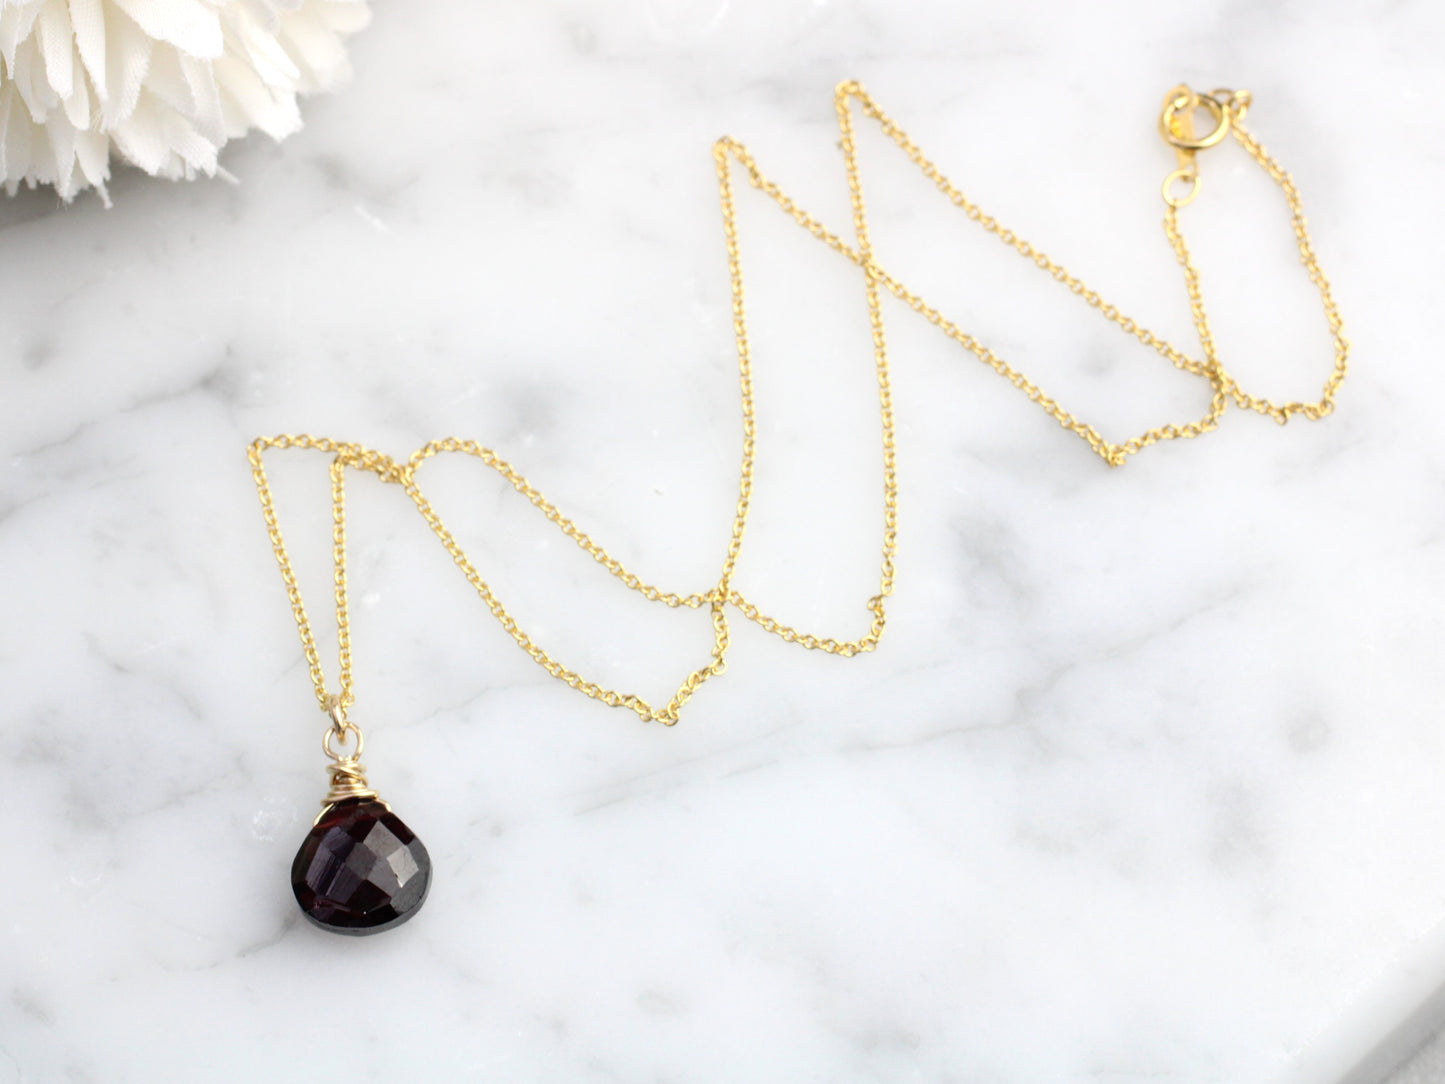 Garnet necklace in sterling silver or gold.